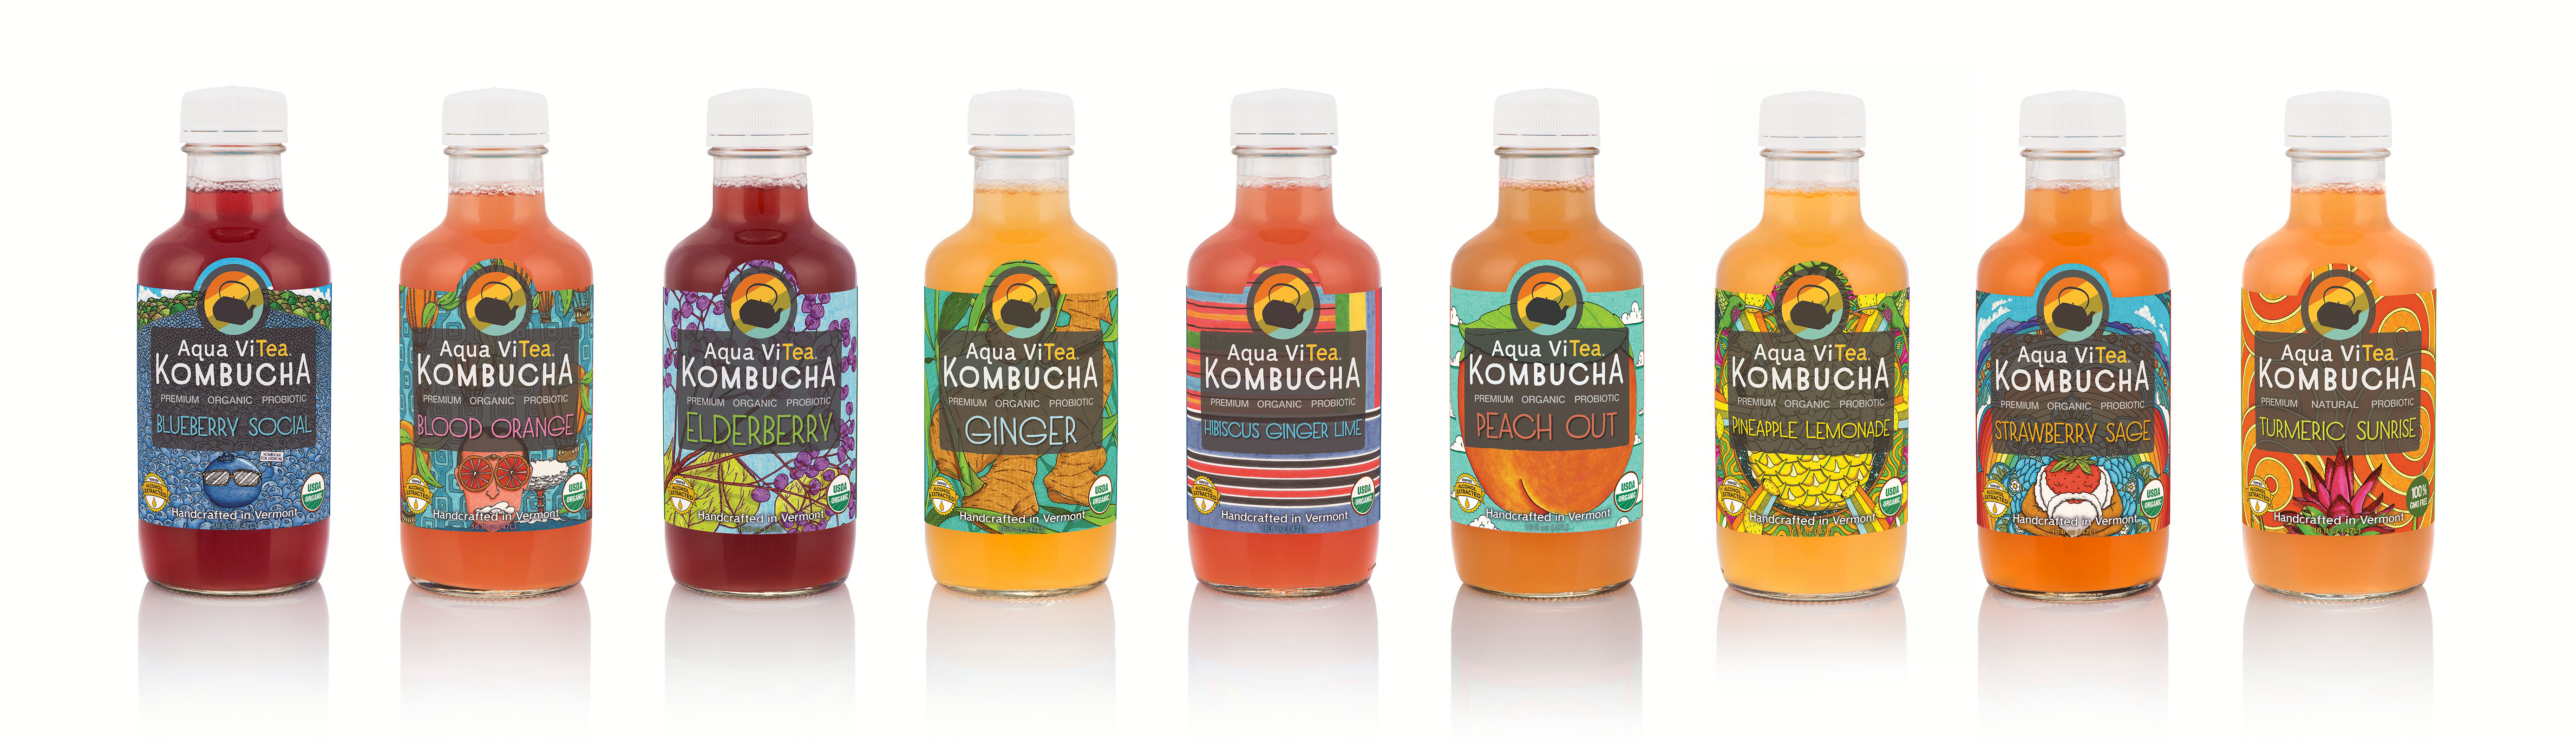 Aqua ViTea Kombucha is a healthier beverage option!